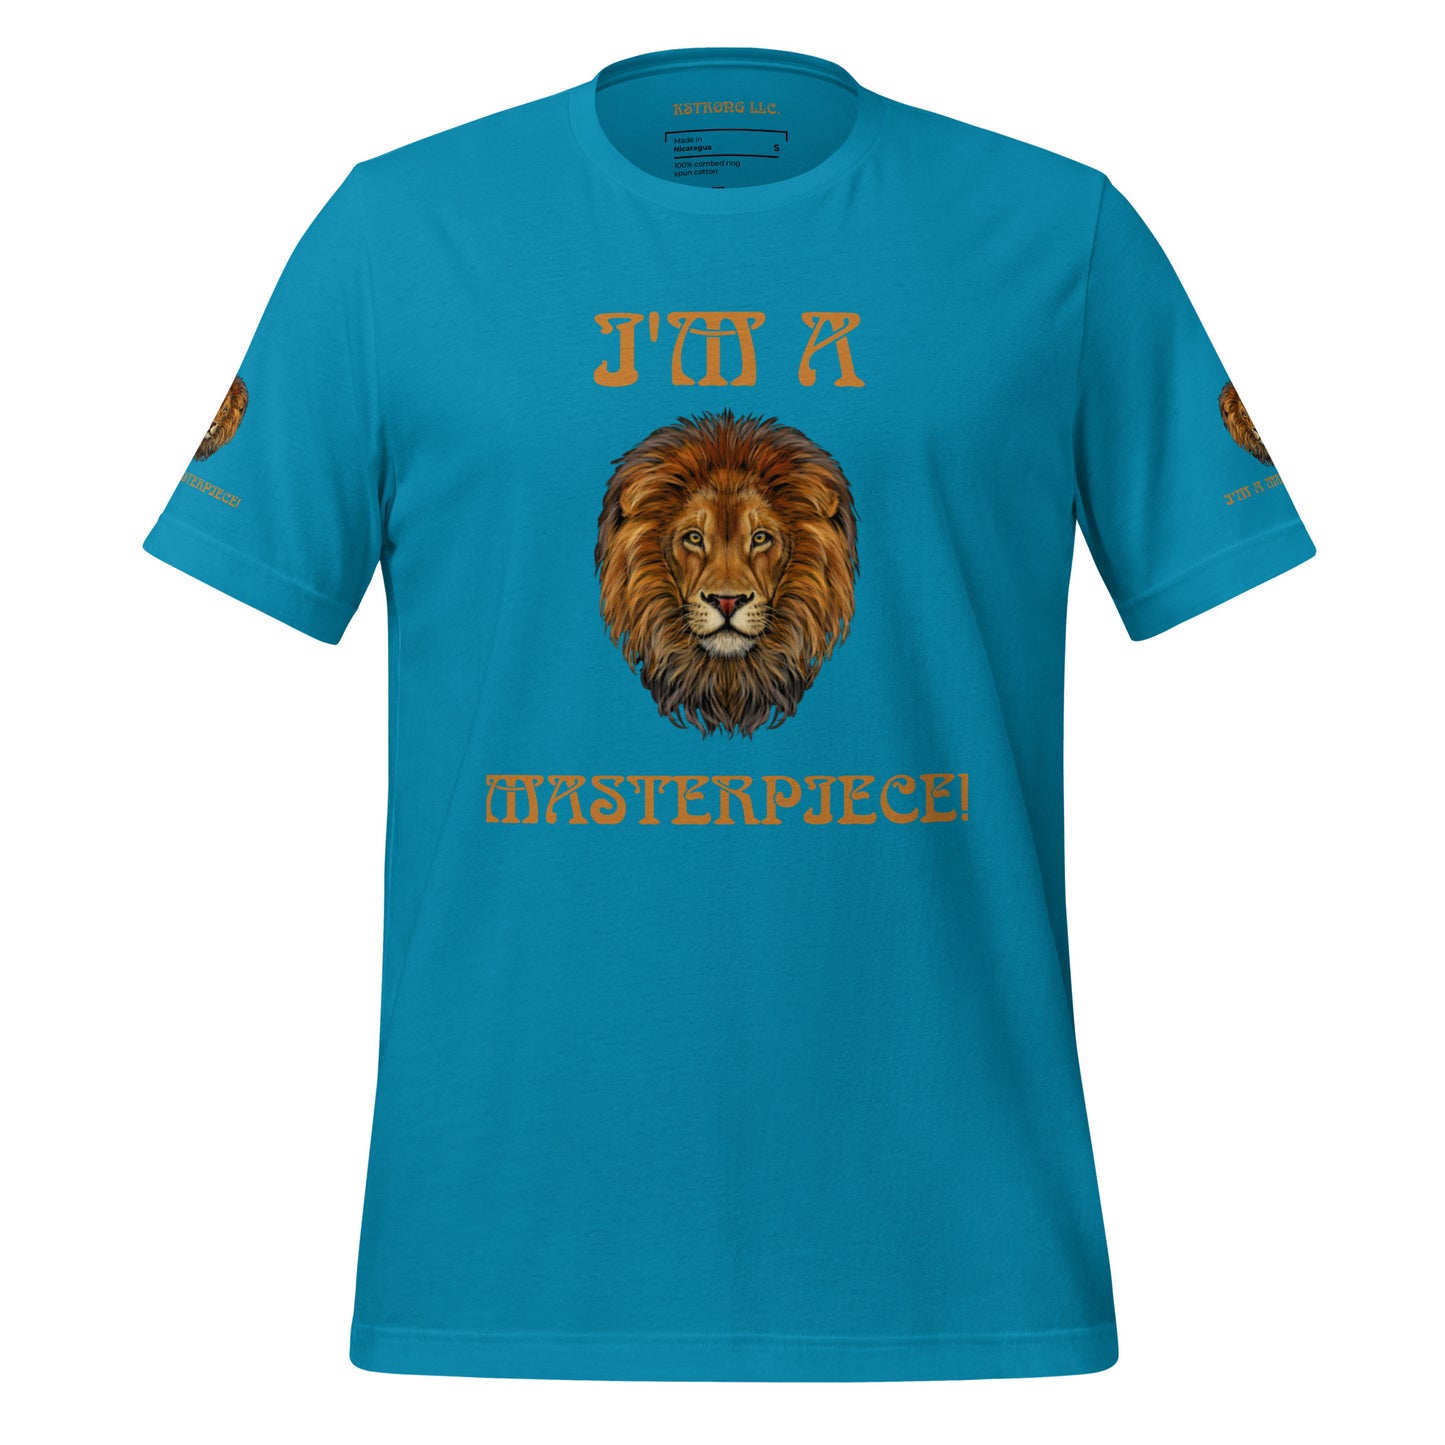 “I’M A MASTERPIECE!"Unisex T-Shirt W/Bronze Font